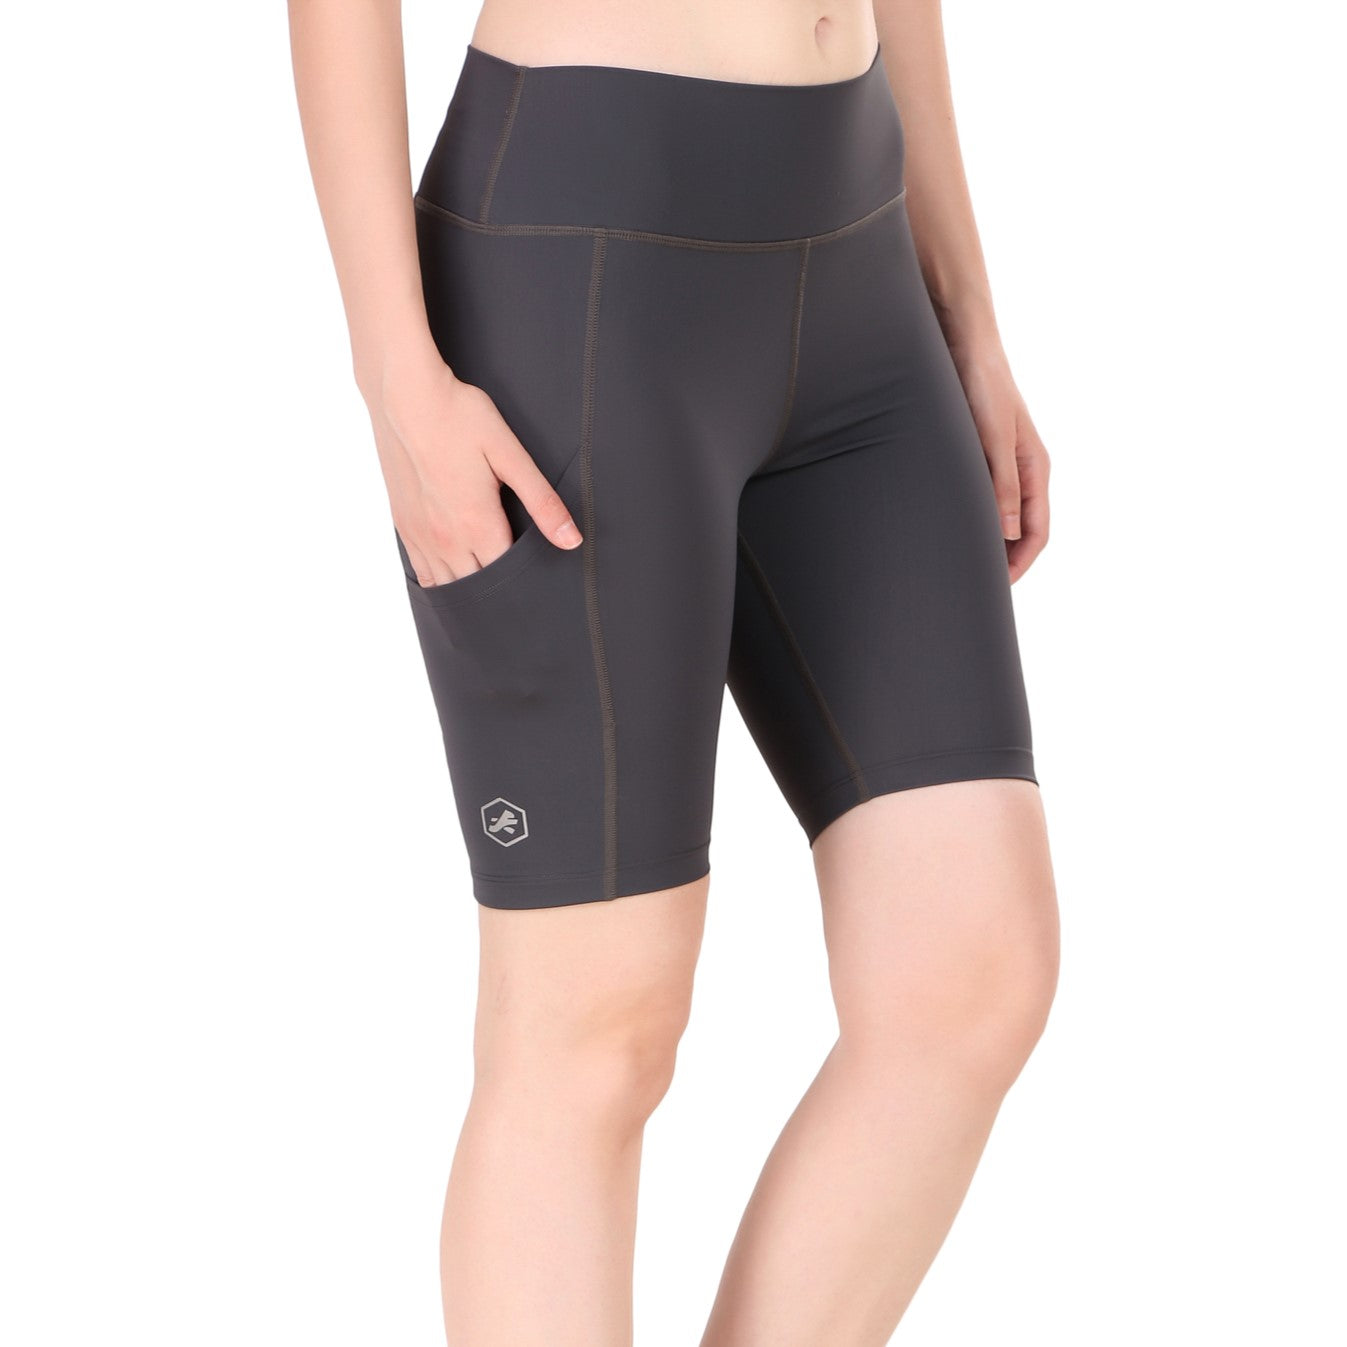 Nylon Compression Shorts For Women (Dark Grey) – ReDesign Sports